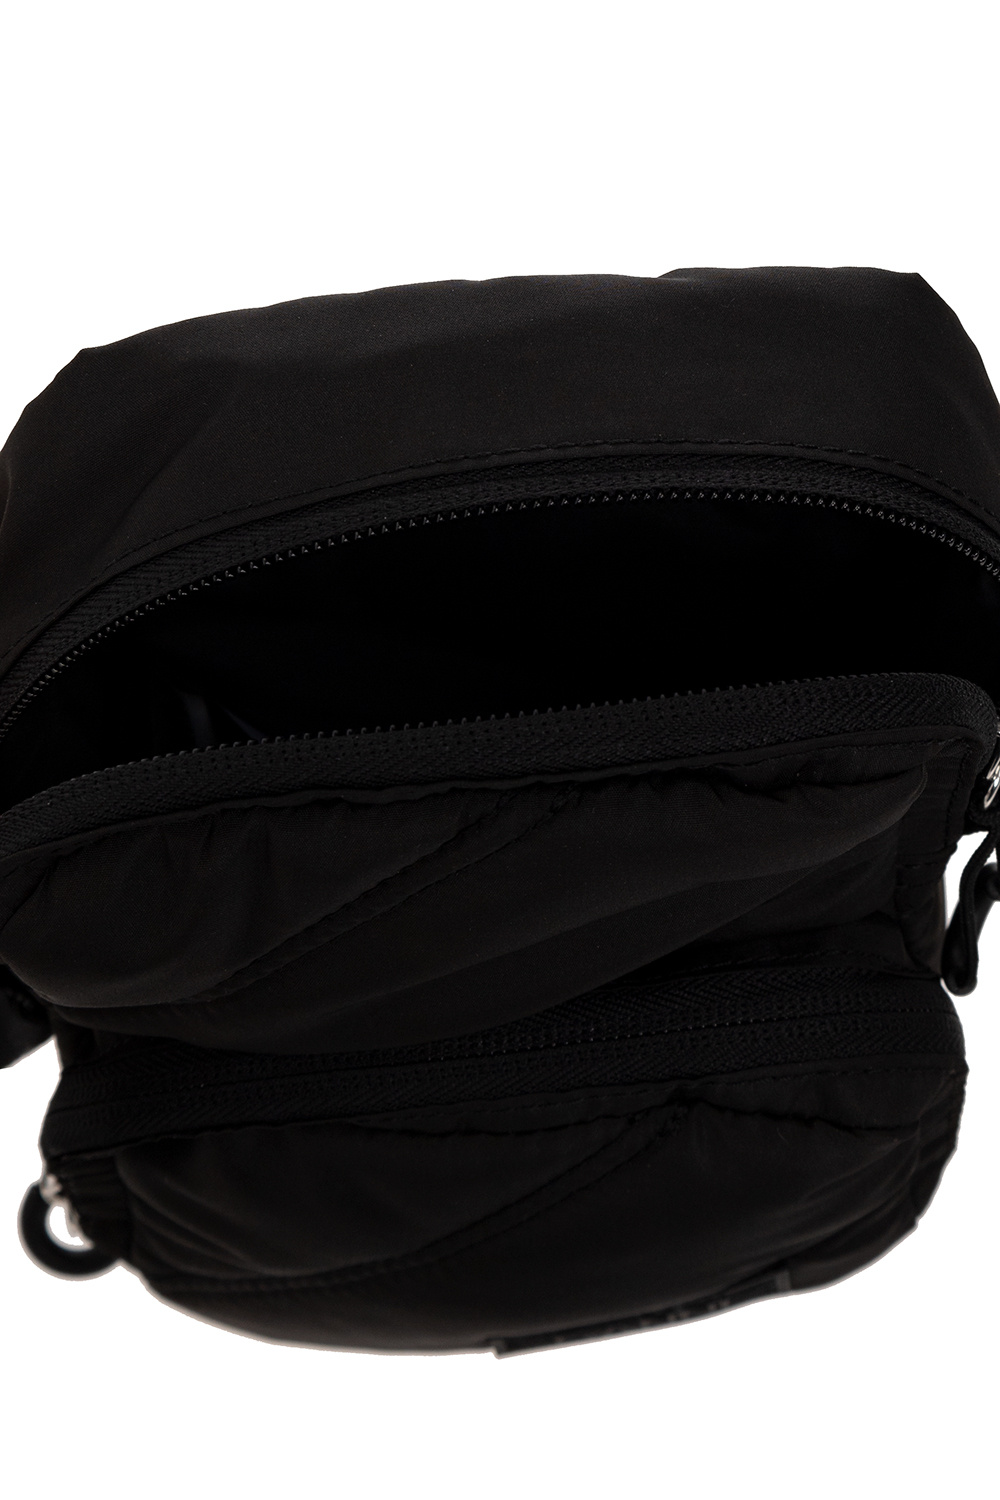 Ganni Шикарные женские рюкзаки guess backpack наложка